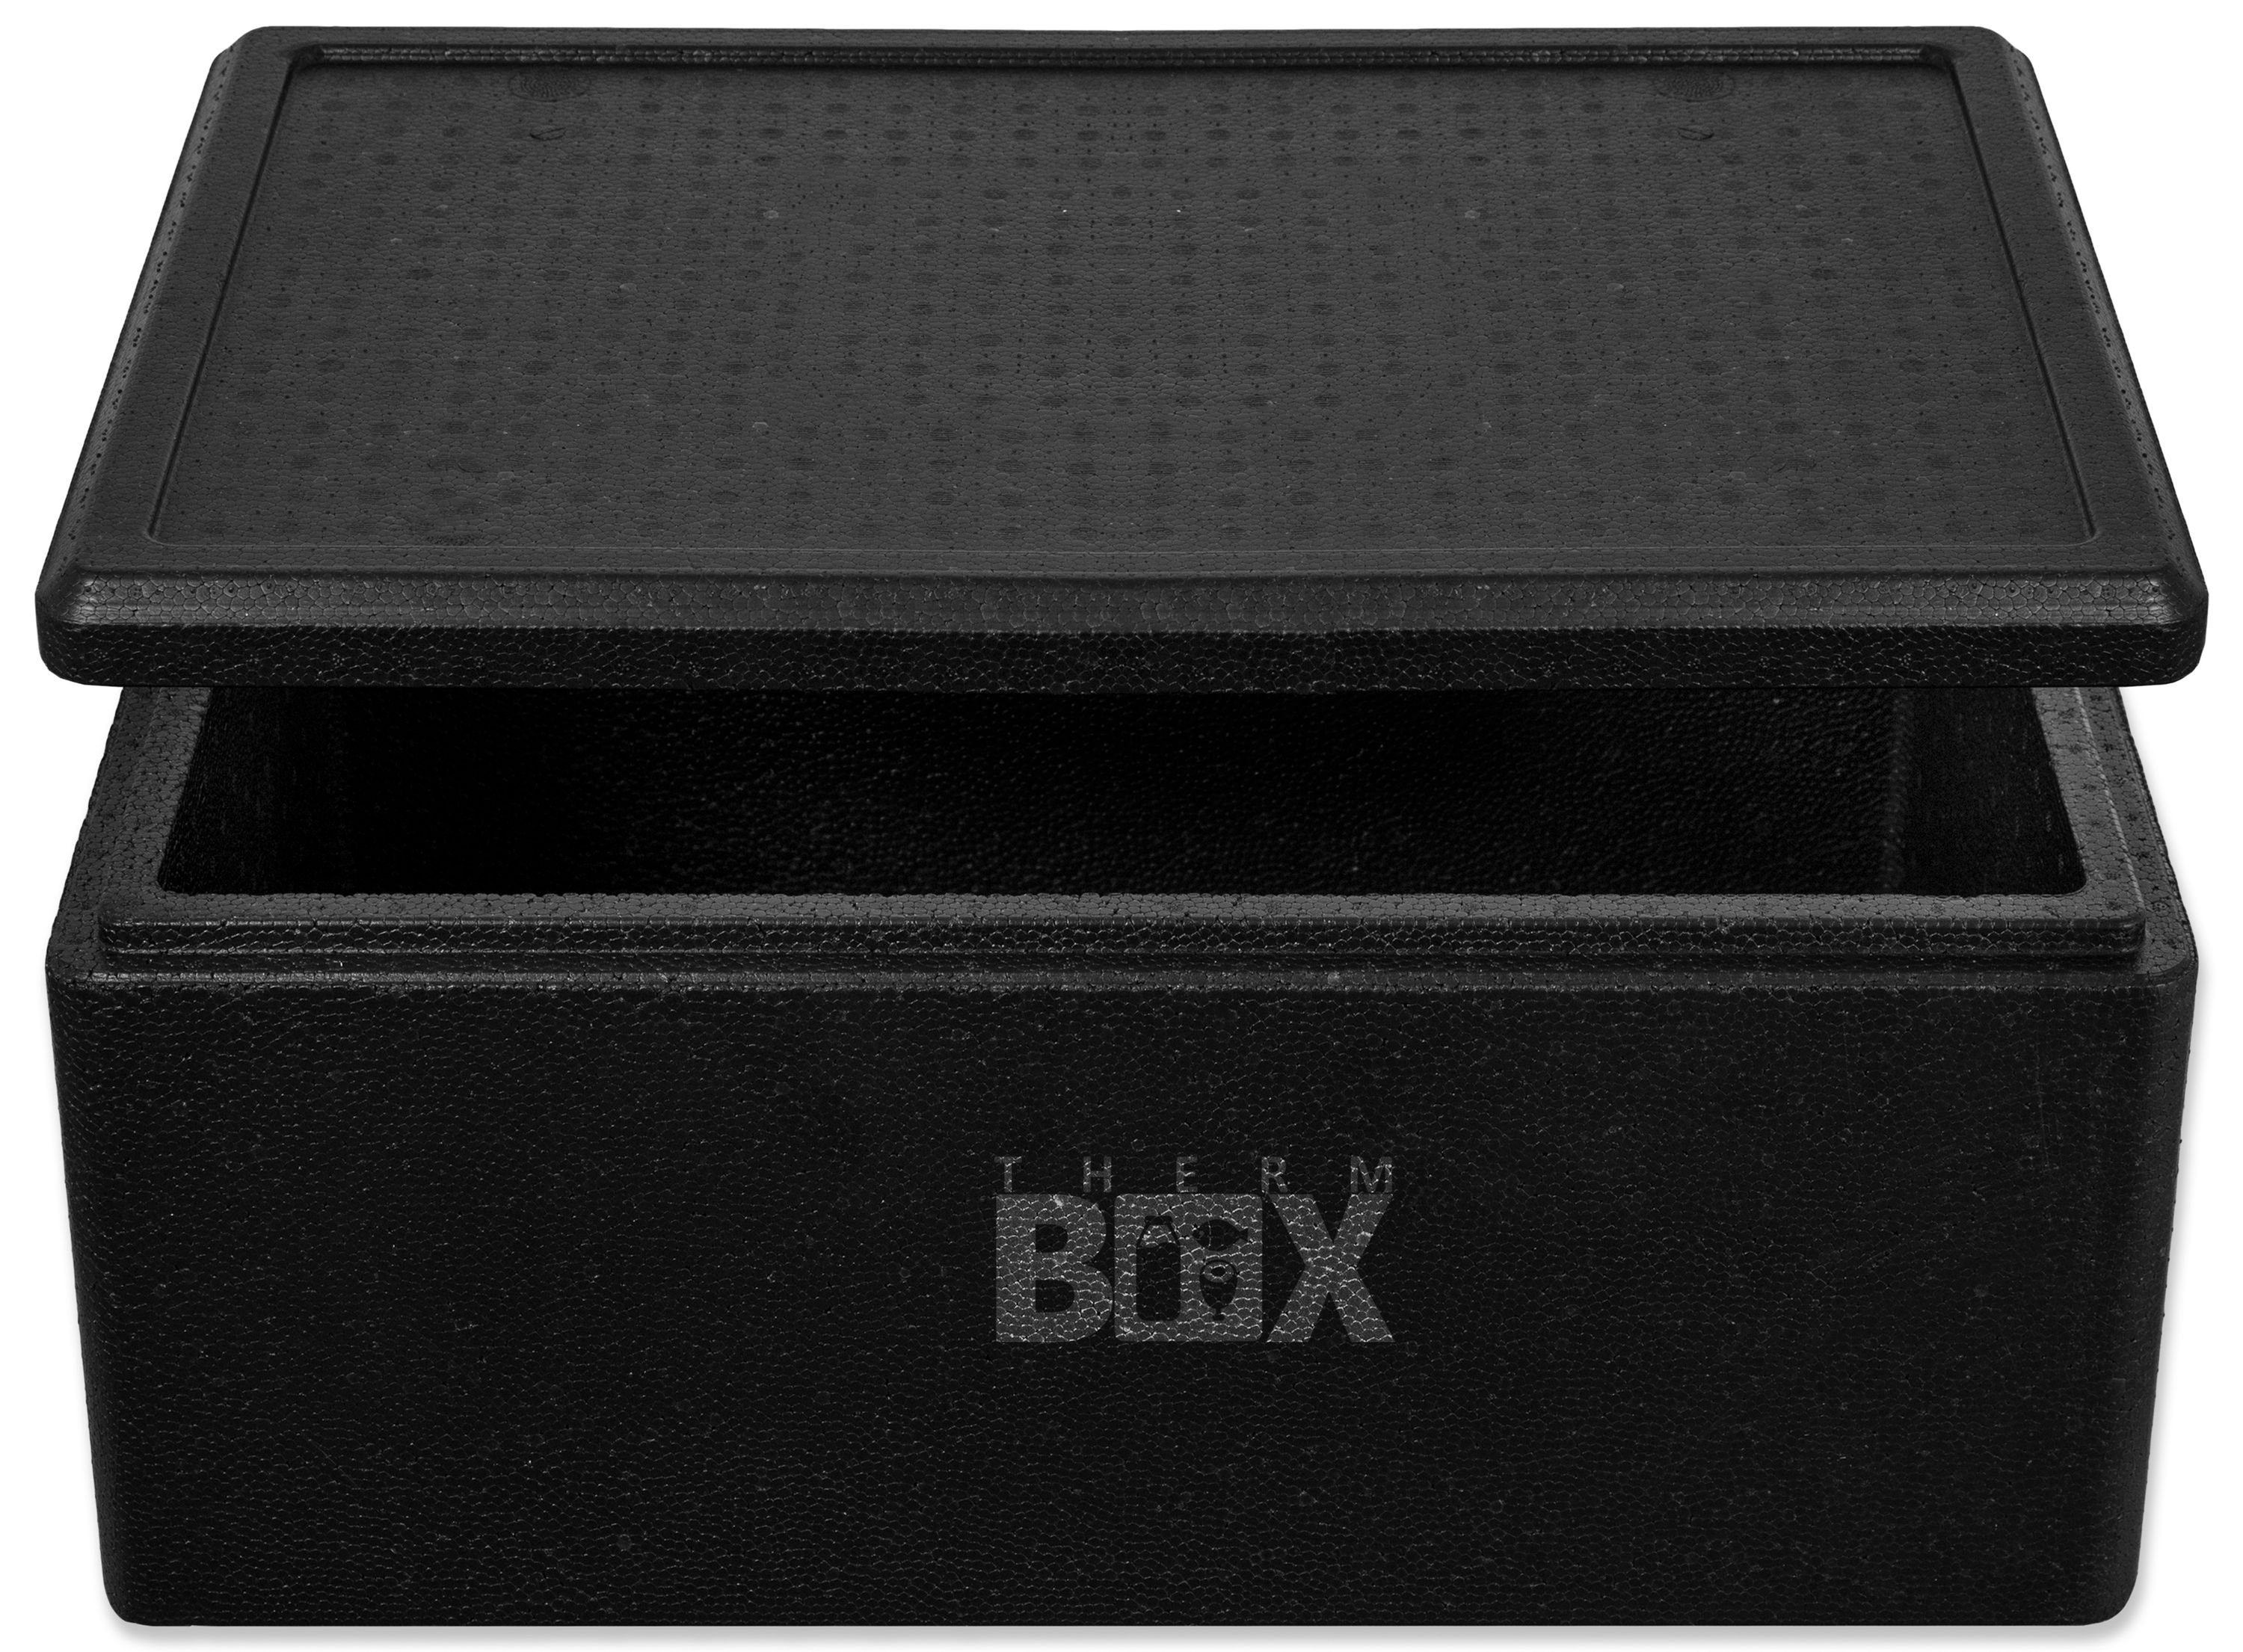 THERM-BOX Deckel Wand: (0-tlg., Thermobehälter im Karton), Thermbox 36B Warmhaltebox Styroporbox Isolierbox Styropor-Piocelan, Wiederverwendbar mit 3cm Innenmaß:53x33x20cm, Box Profibox Kühlbox 36,1L